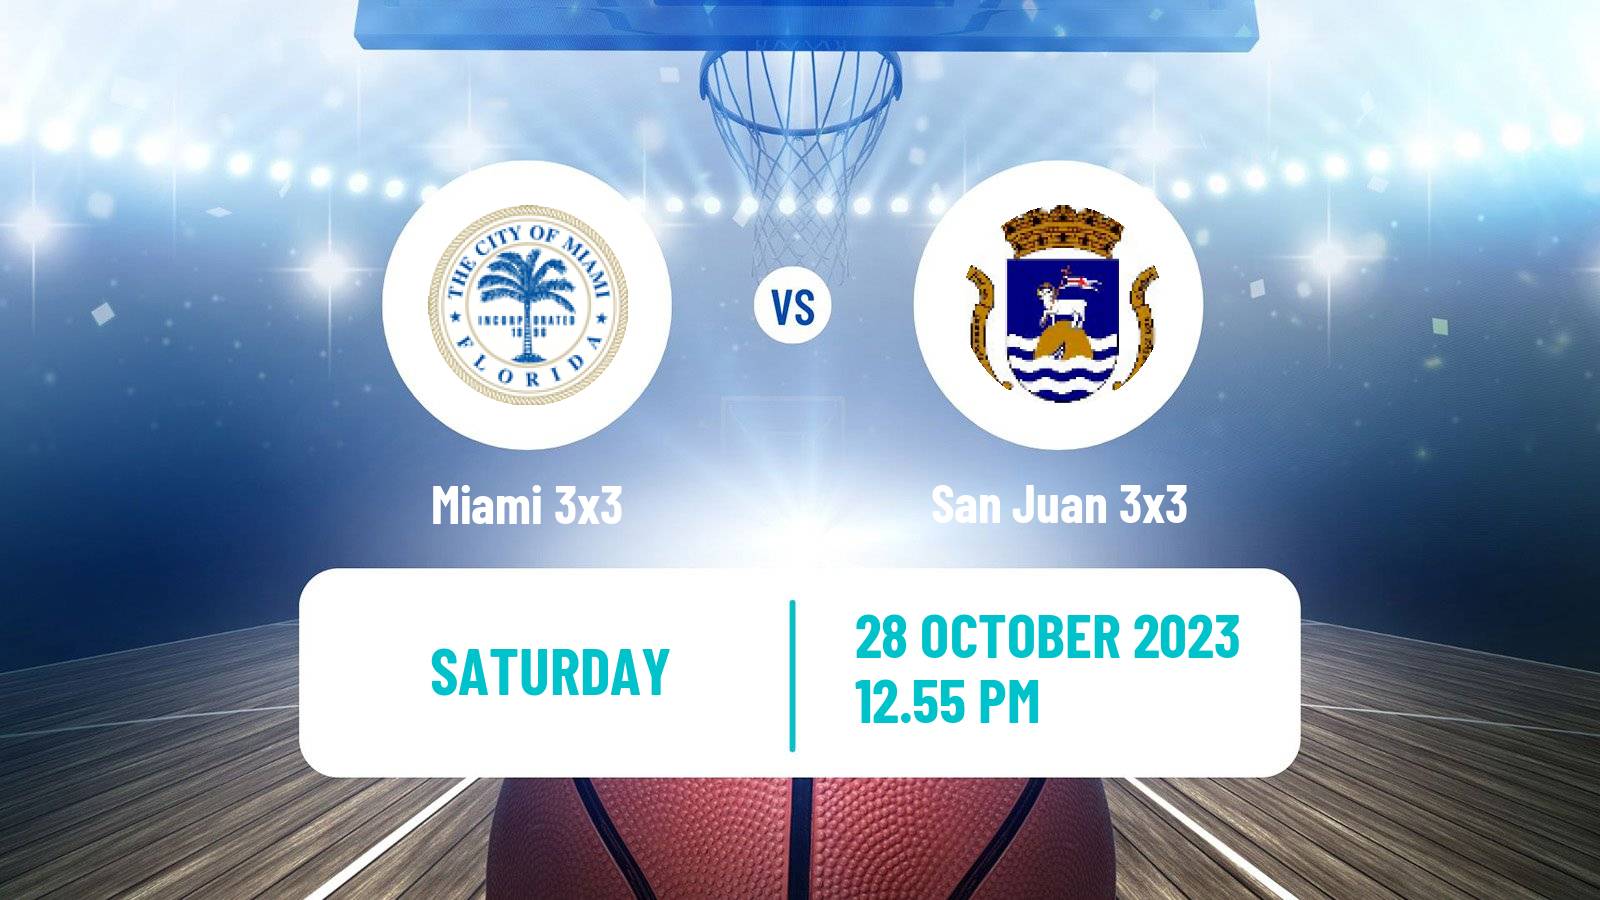 Basketball World Tour Abu Dhabi 3x3 Miami 3x3 - San Juan 3x3